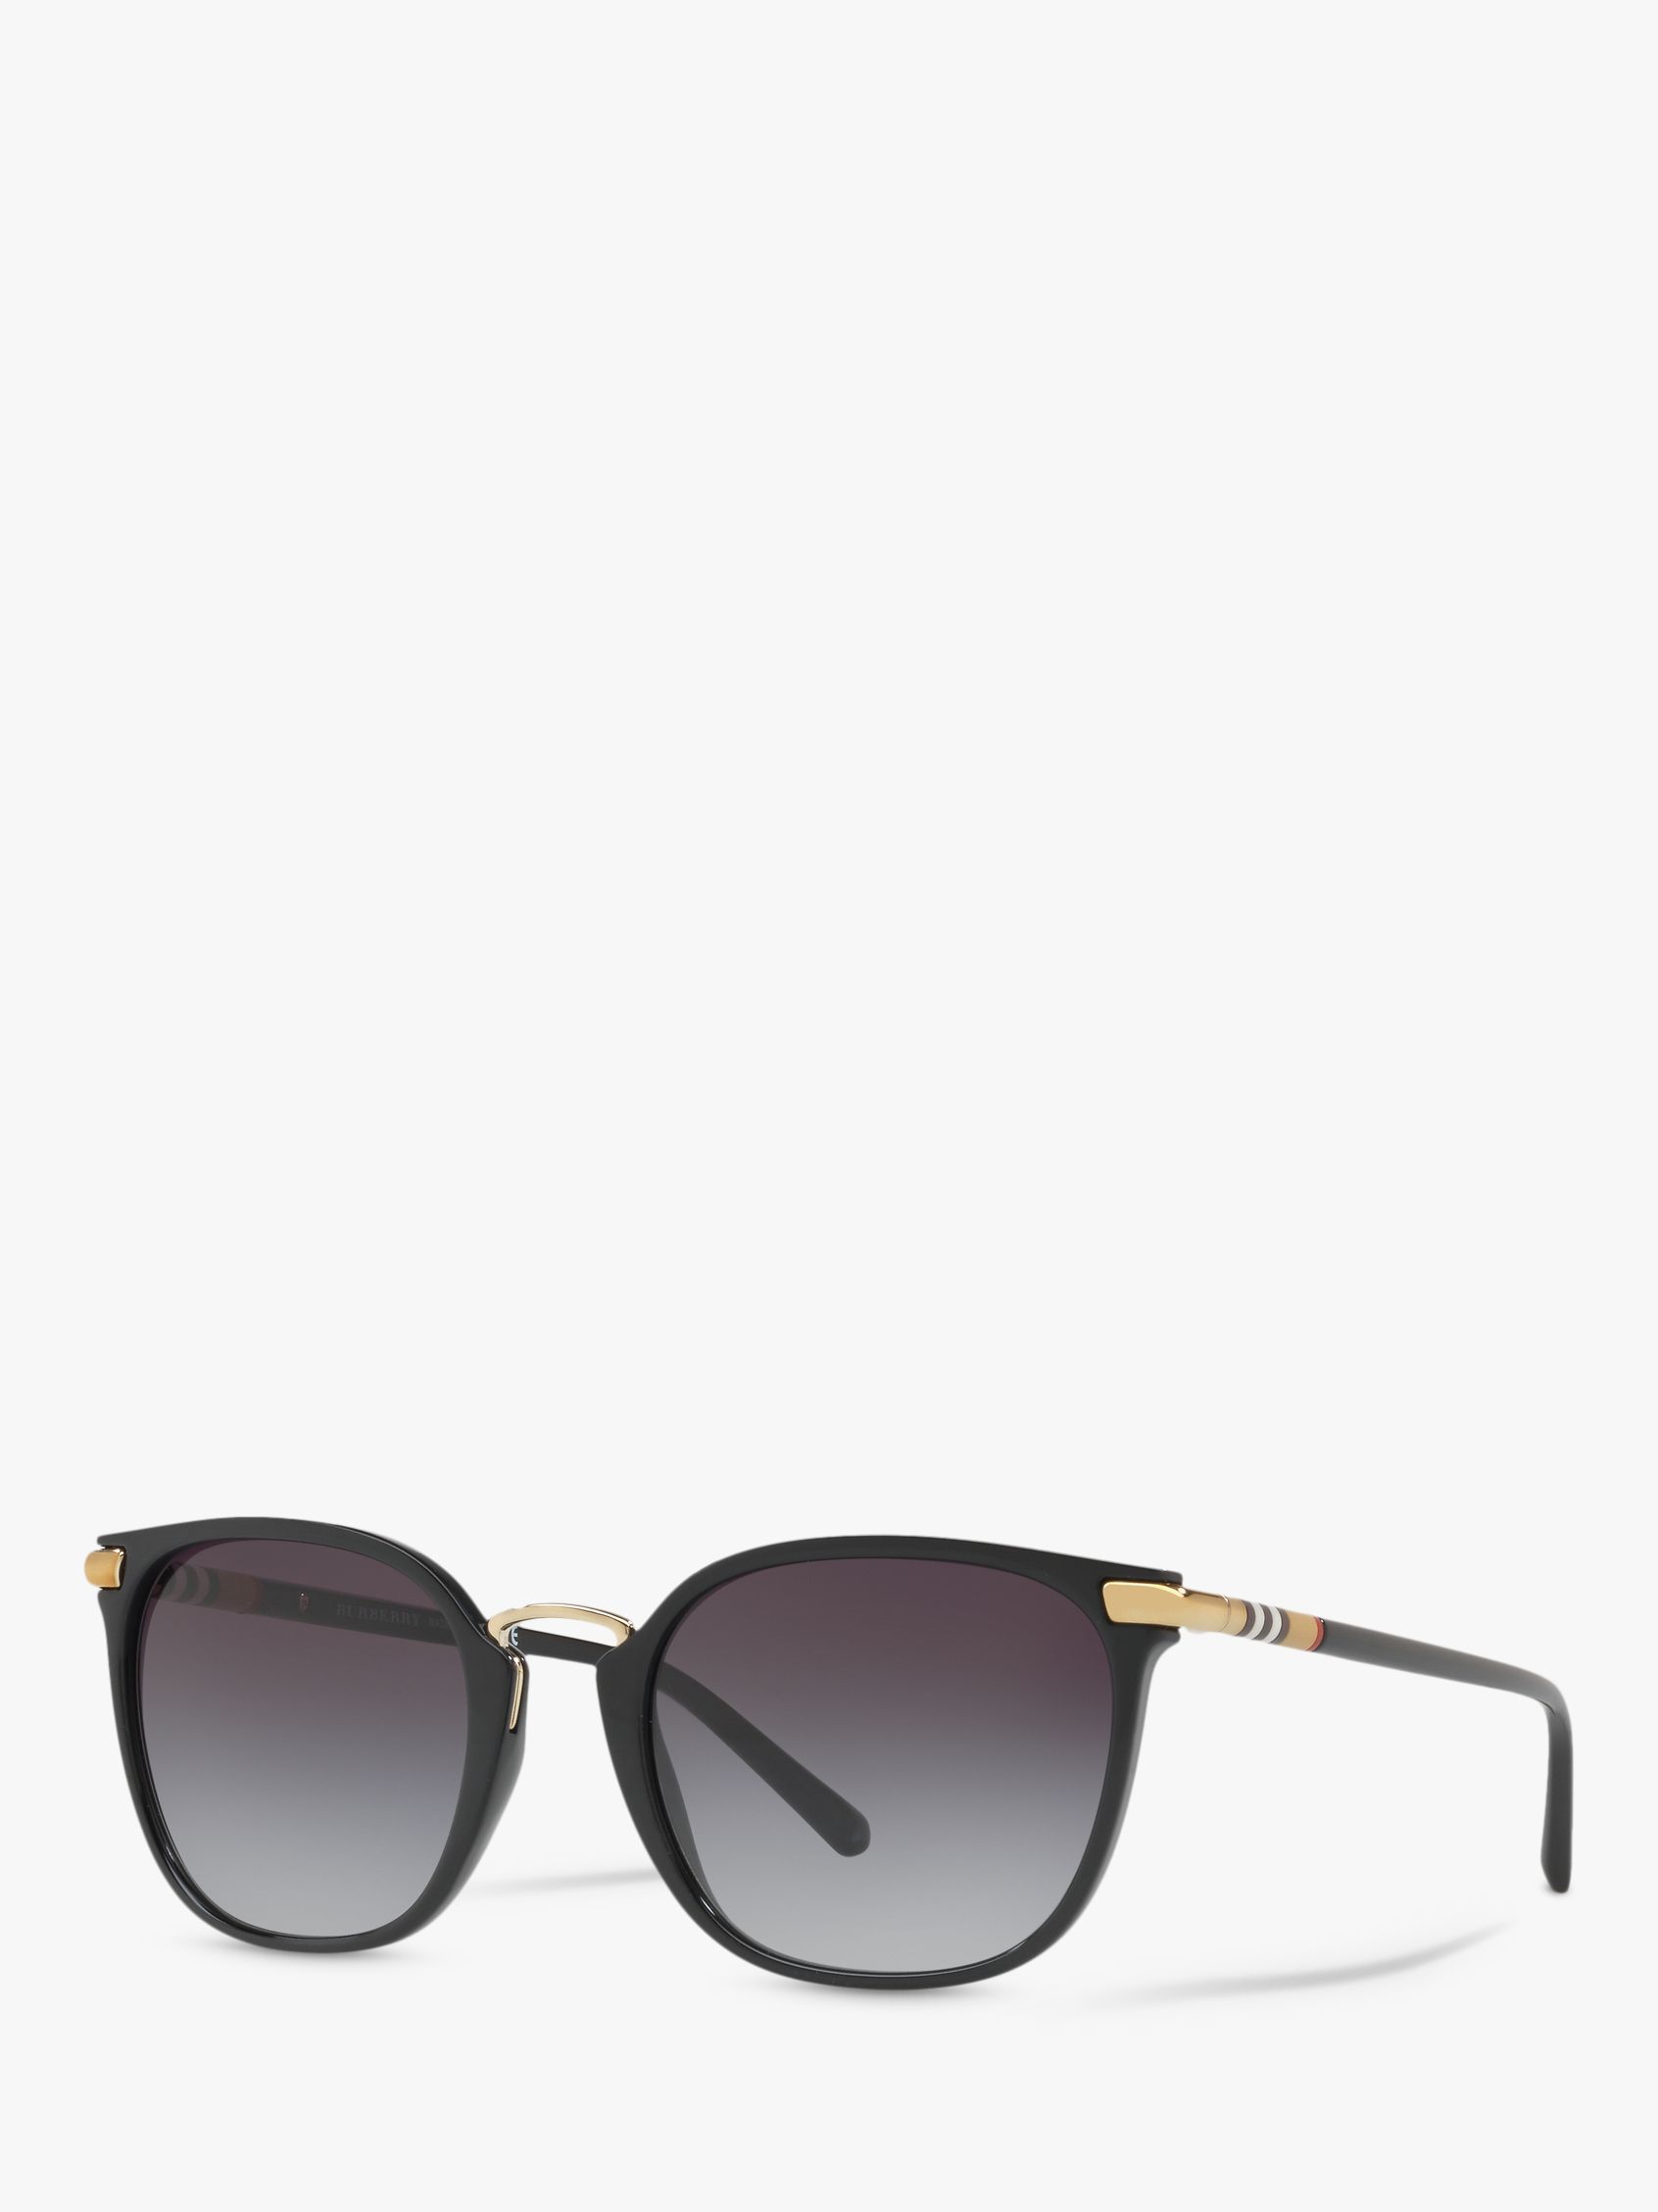 Burberry BE4262 Women's Square Sunglasses